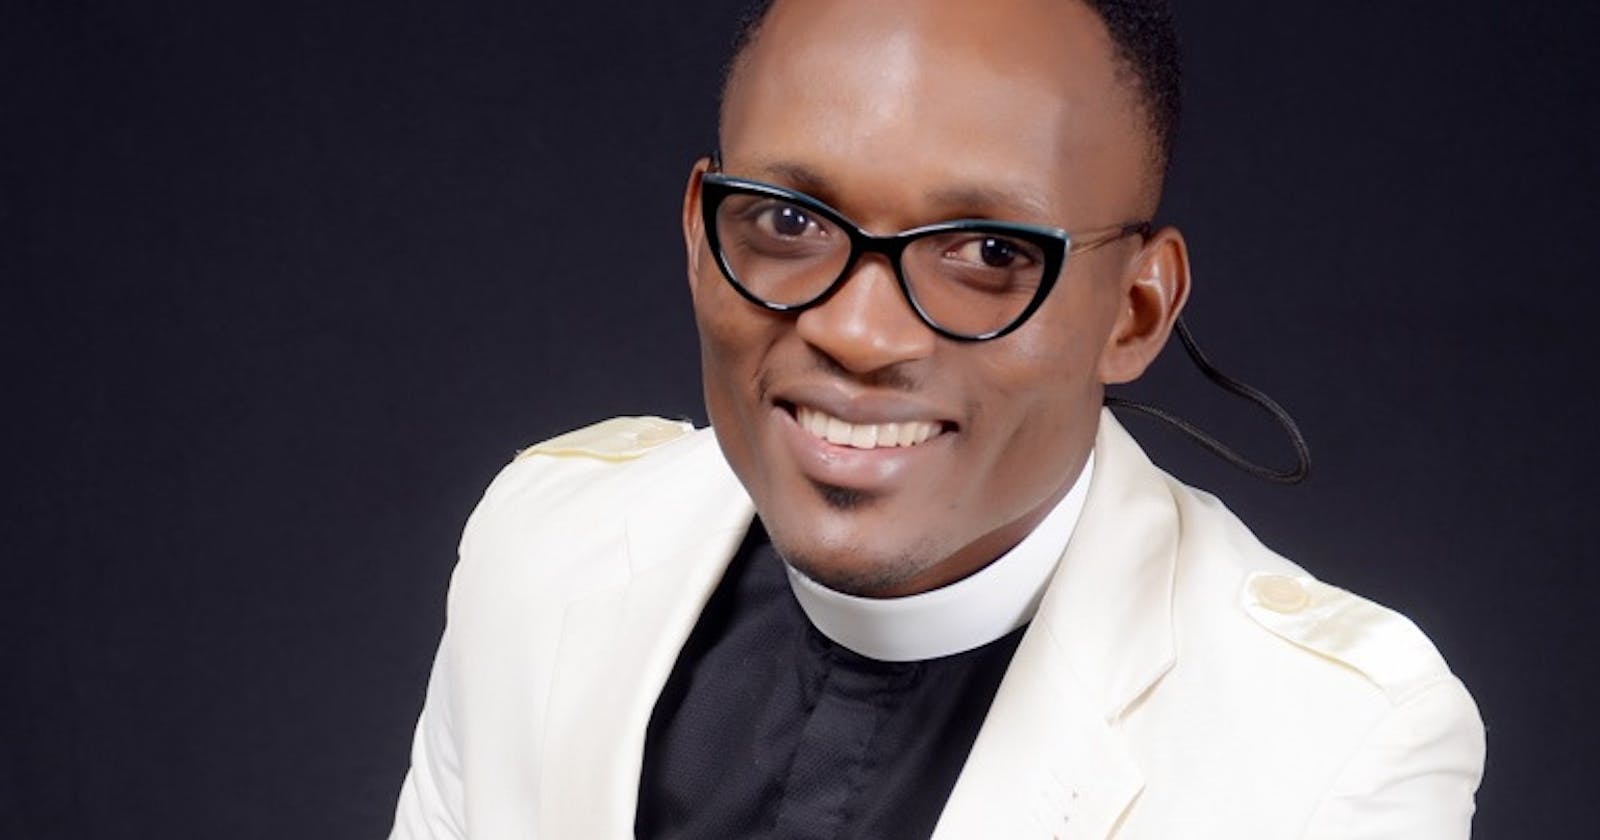 Meet Rev. Chijioke Agbaeze